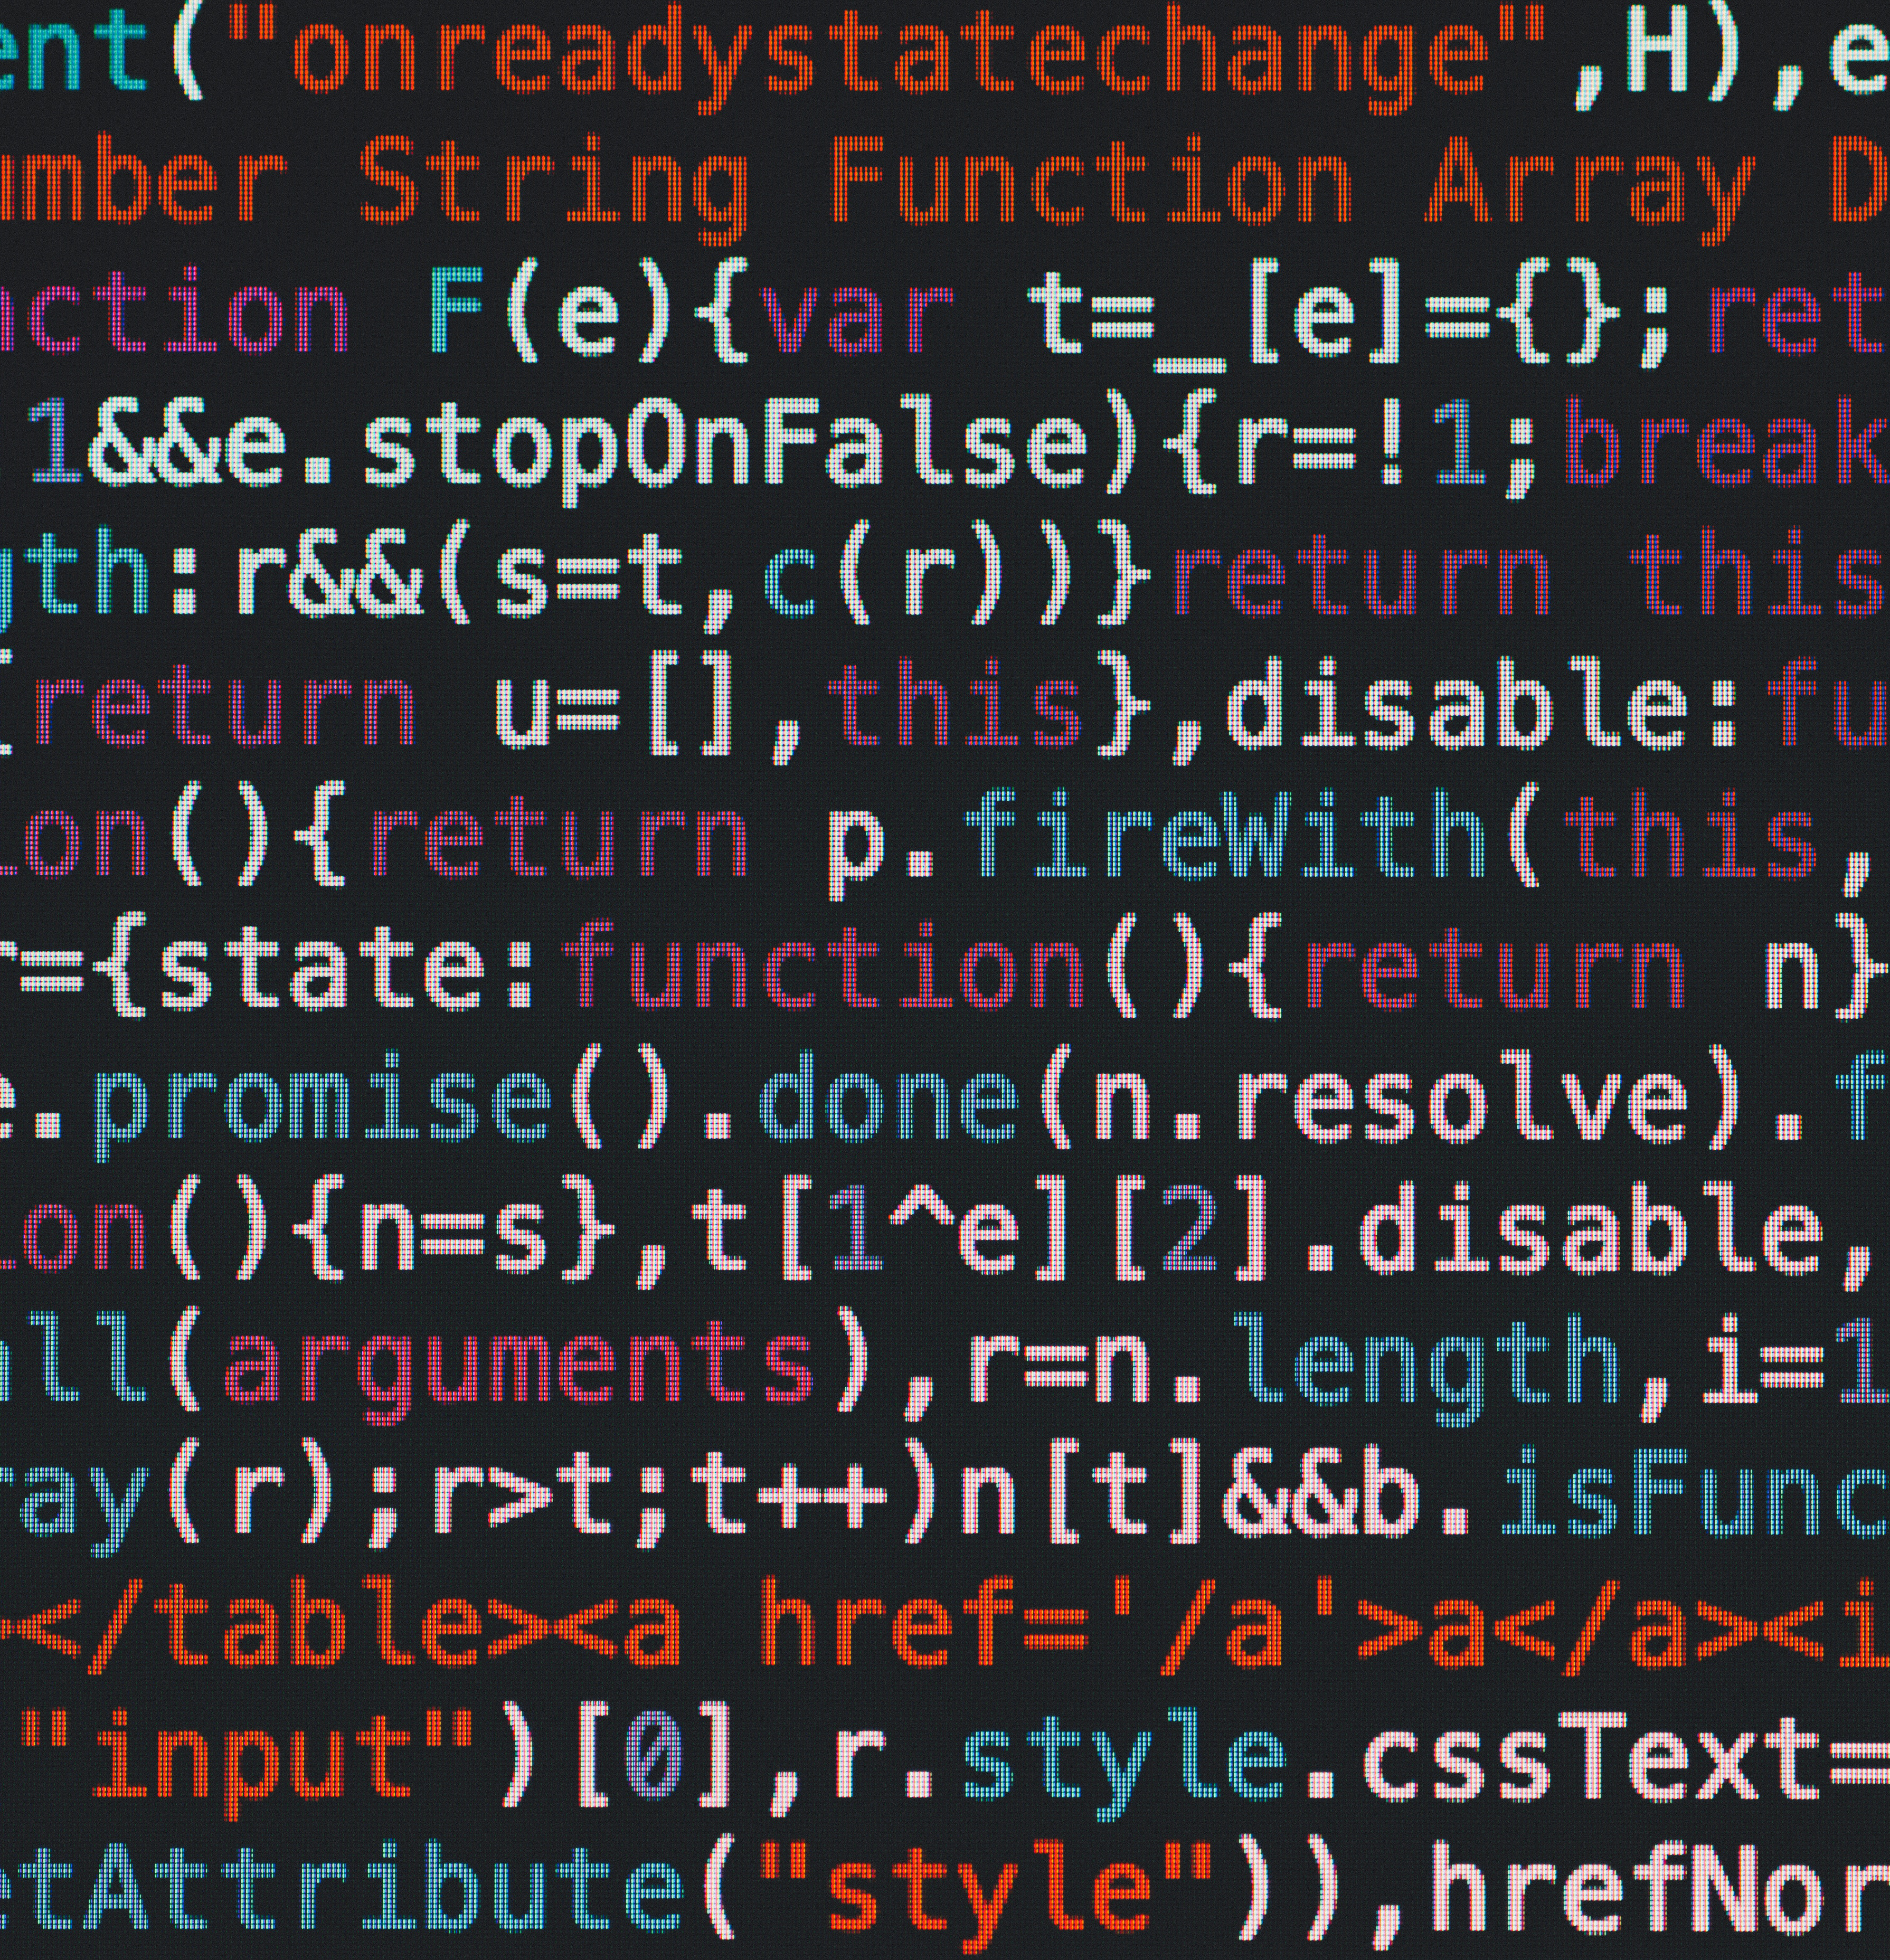 A screen of computer code